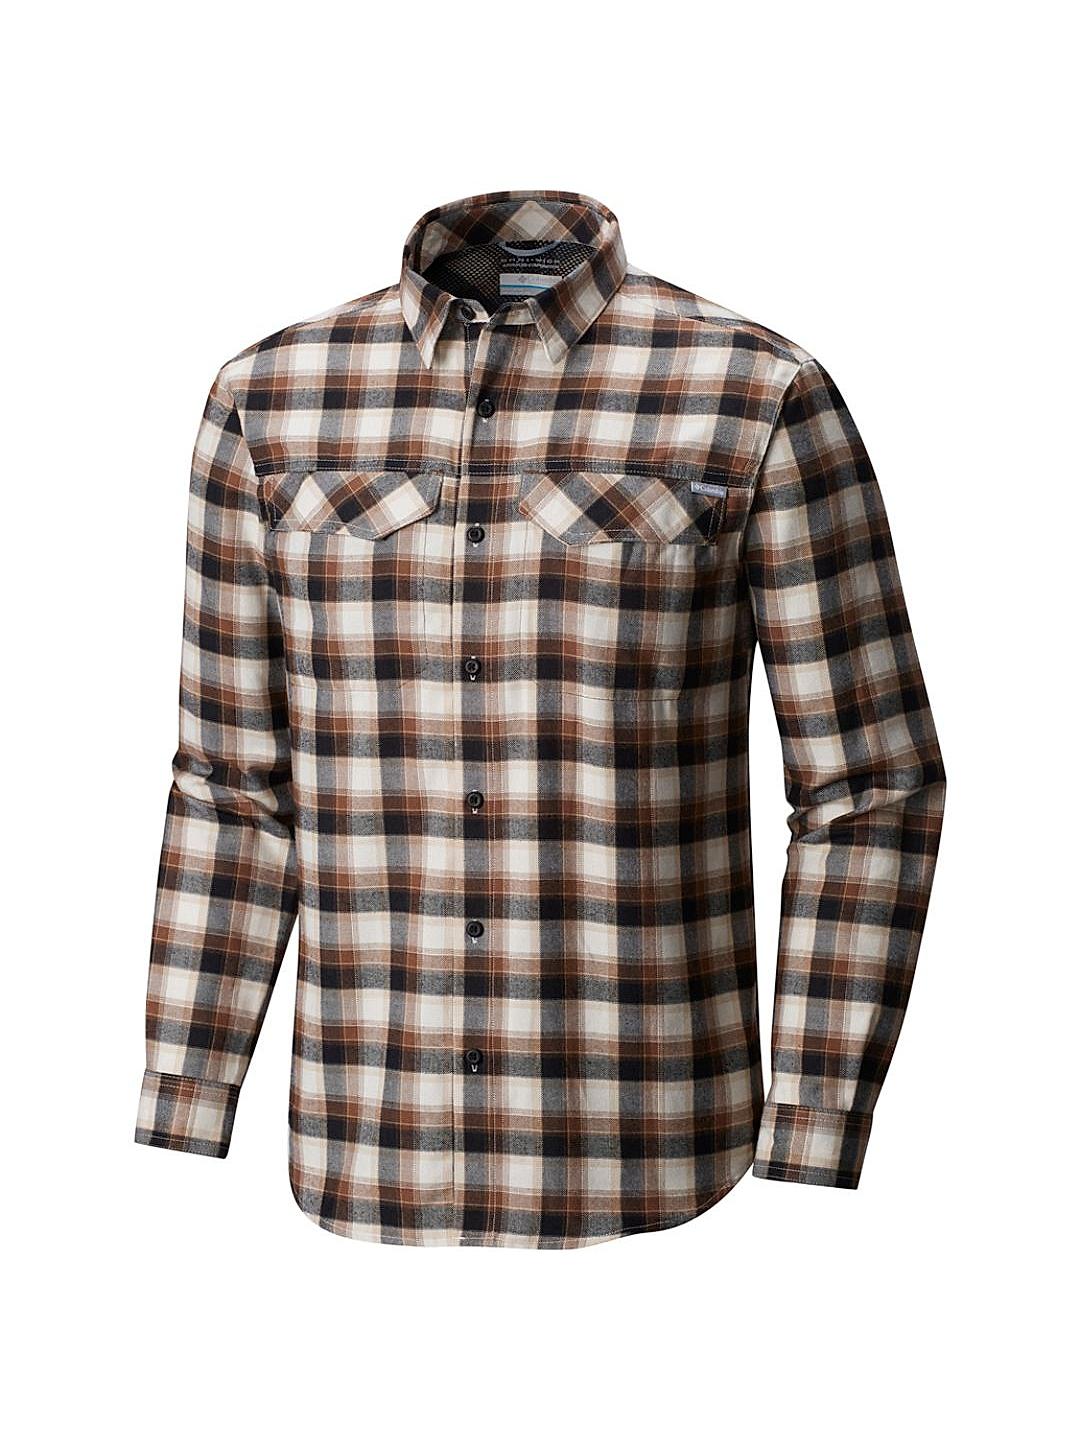 Men's Shirts: Long Sleeve Shirts, Dress Shirts & Flannels